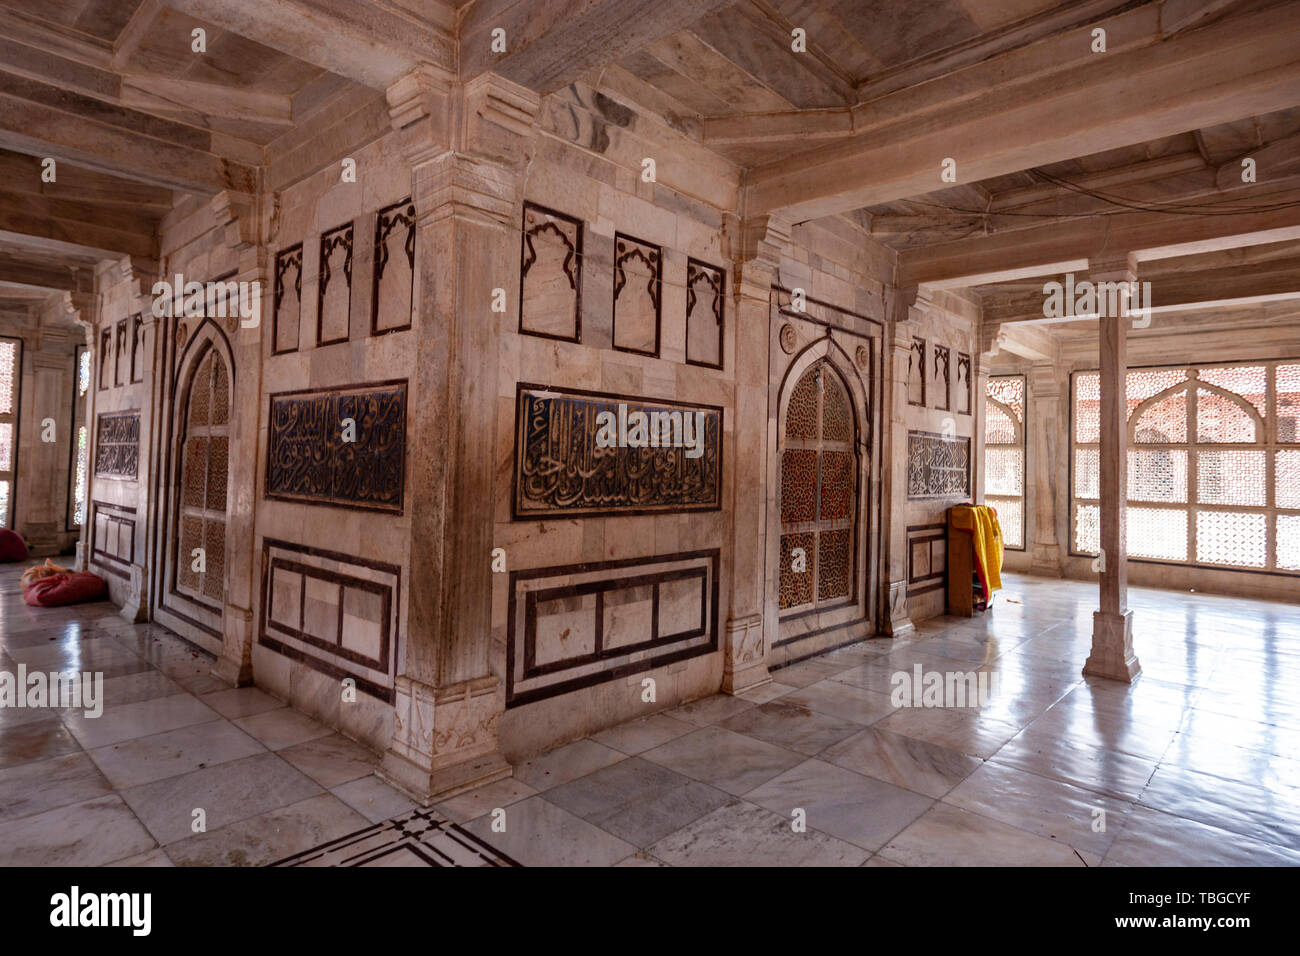 Intricate Jali, stone latticework window, Tomb of Salim Chishti, Jama Masjid, Jama Mosque, Fatehpur Sikri, Agra District of Uttar Pradesh, India. Stock Photo